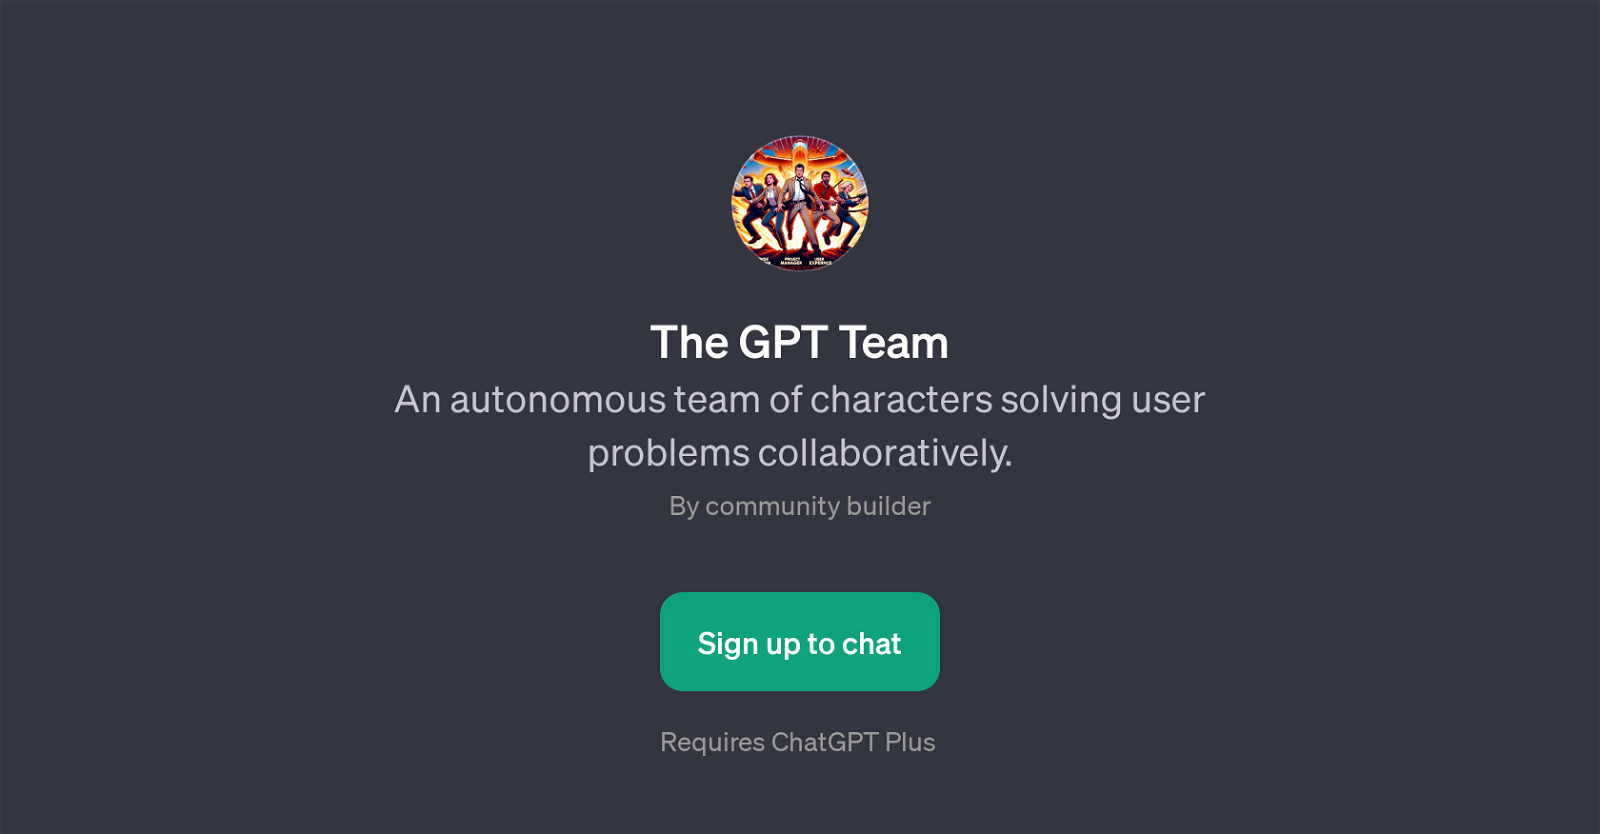 The GPT Team website